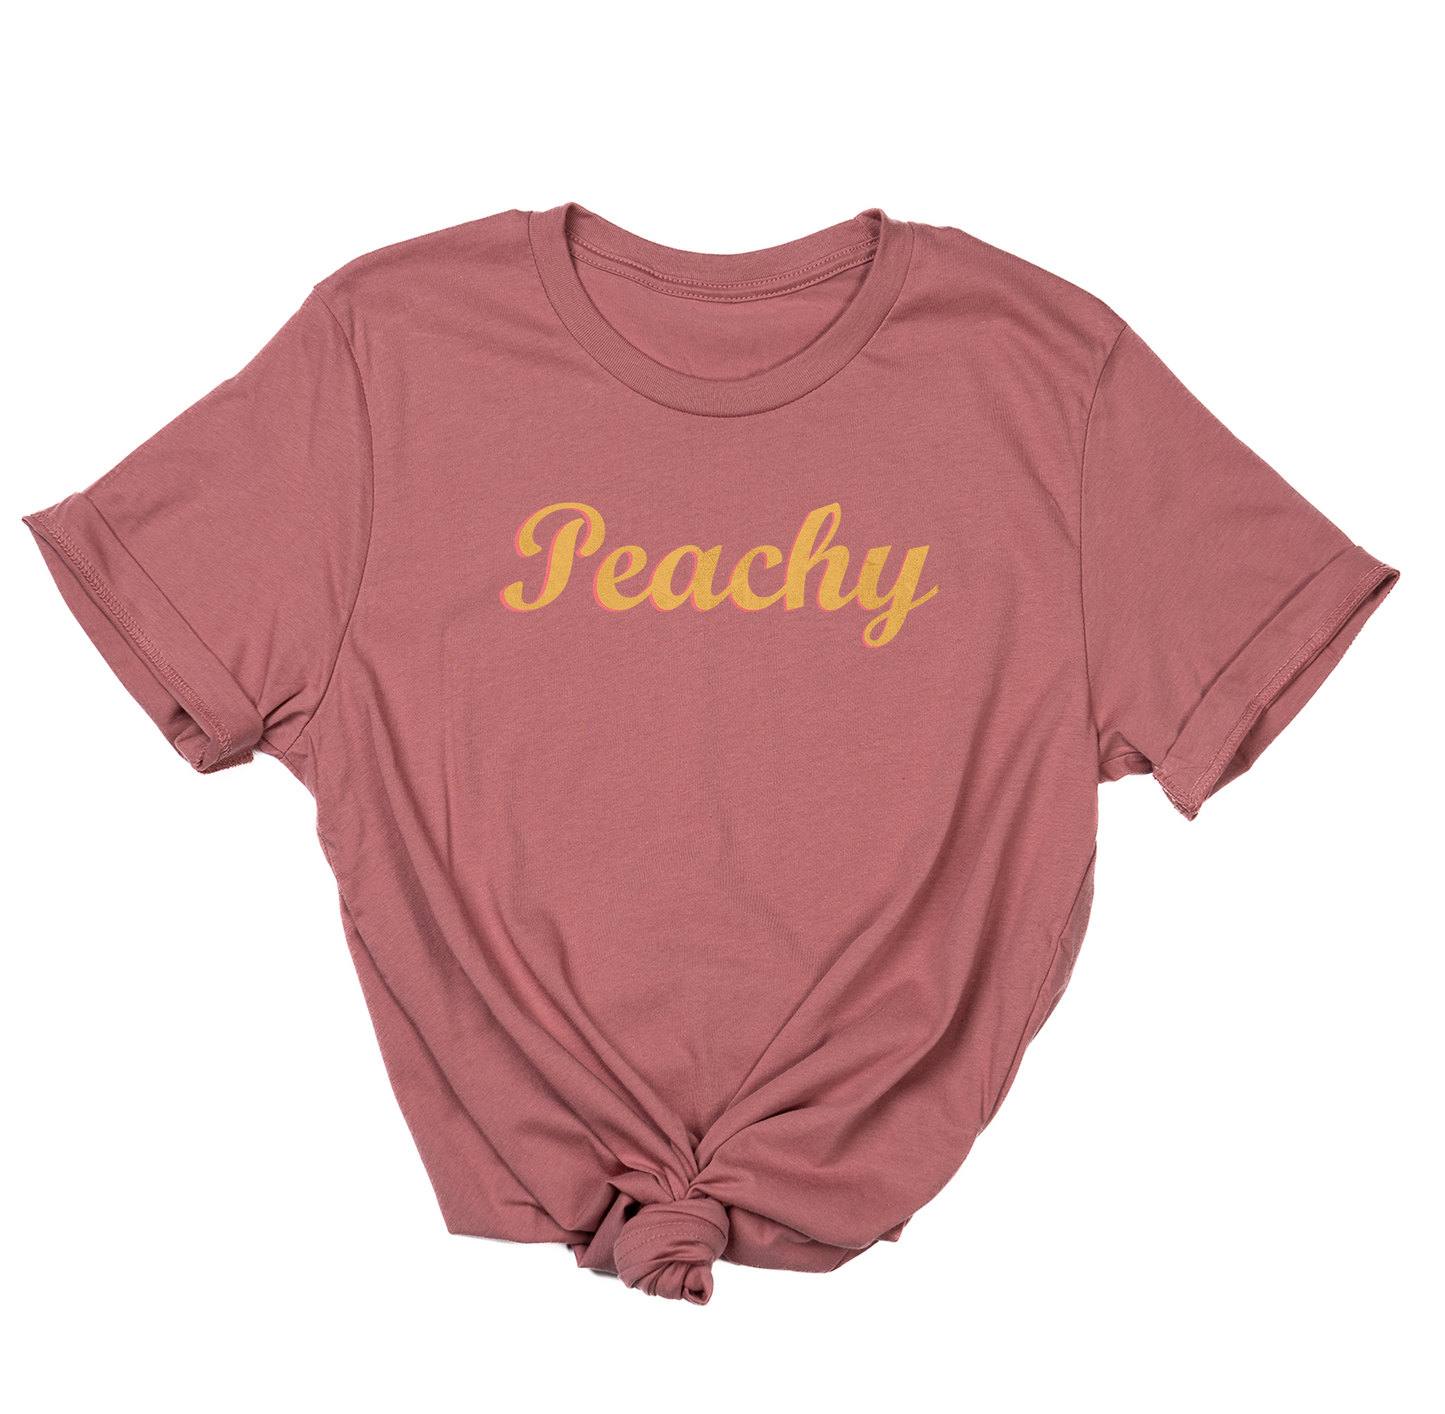 Peachy - Tee (Mauve)